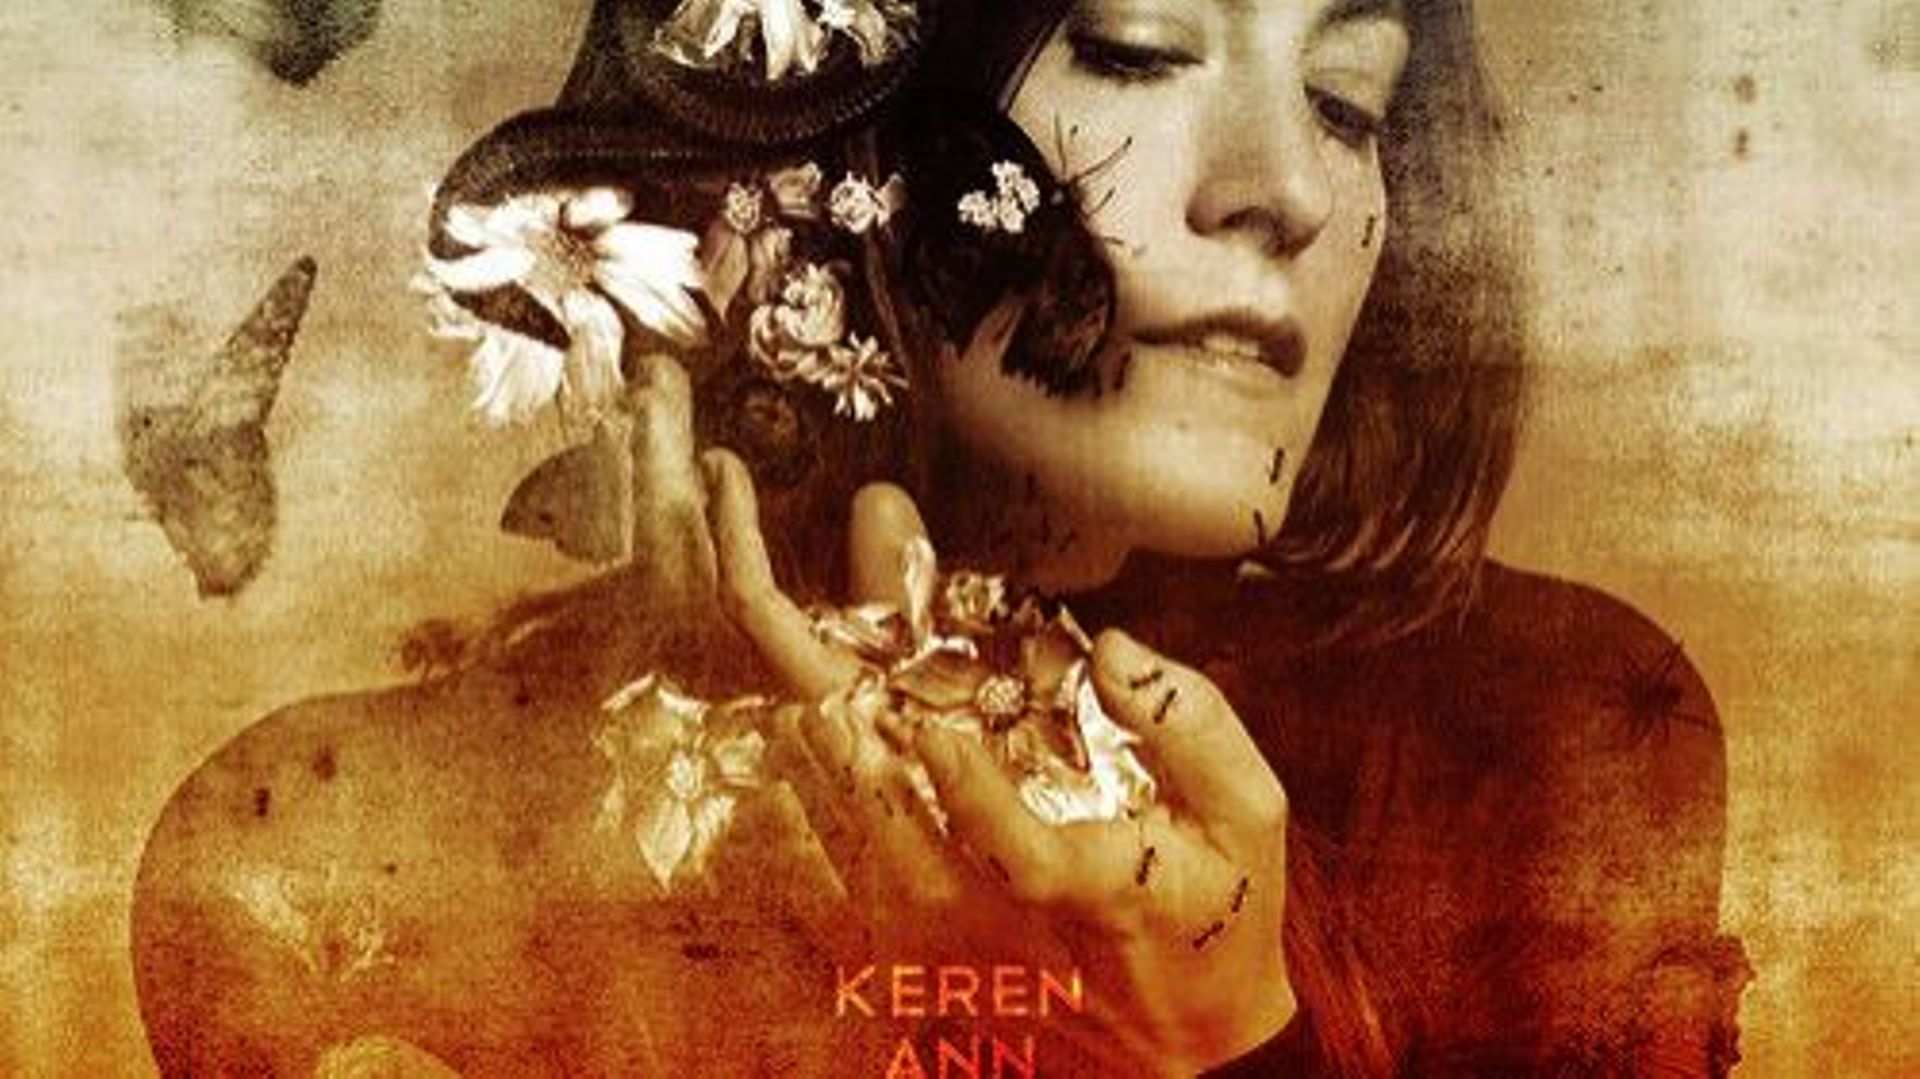 Keren Ann, "You're gonna get love" (Polydor/Universal)